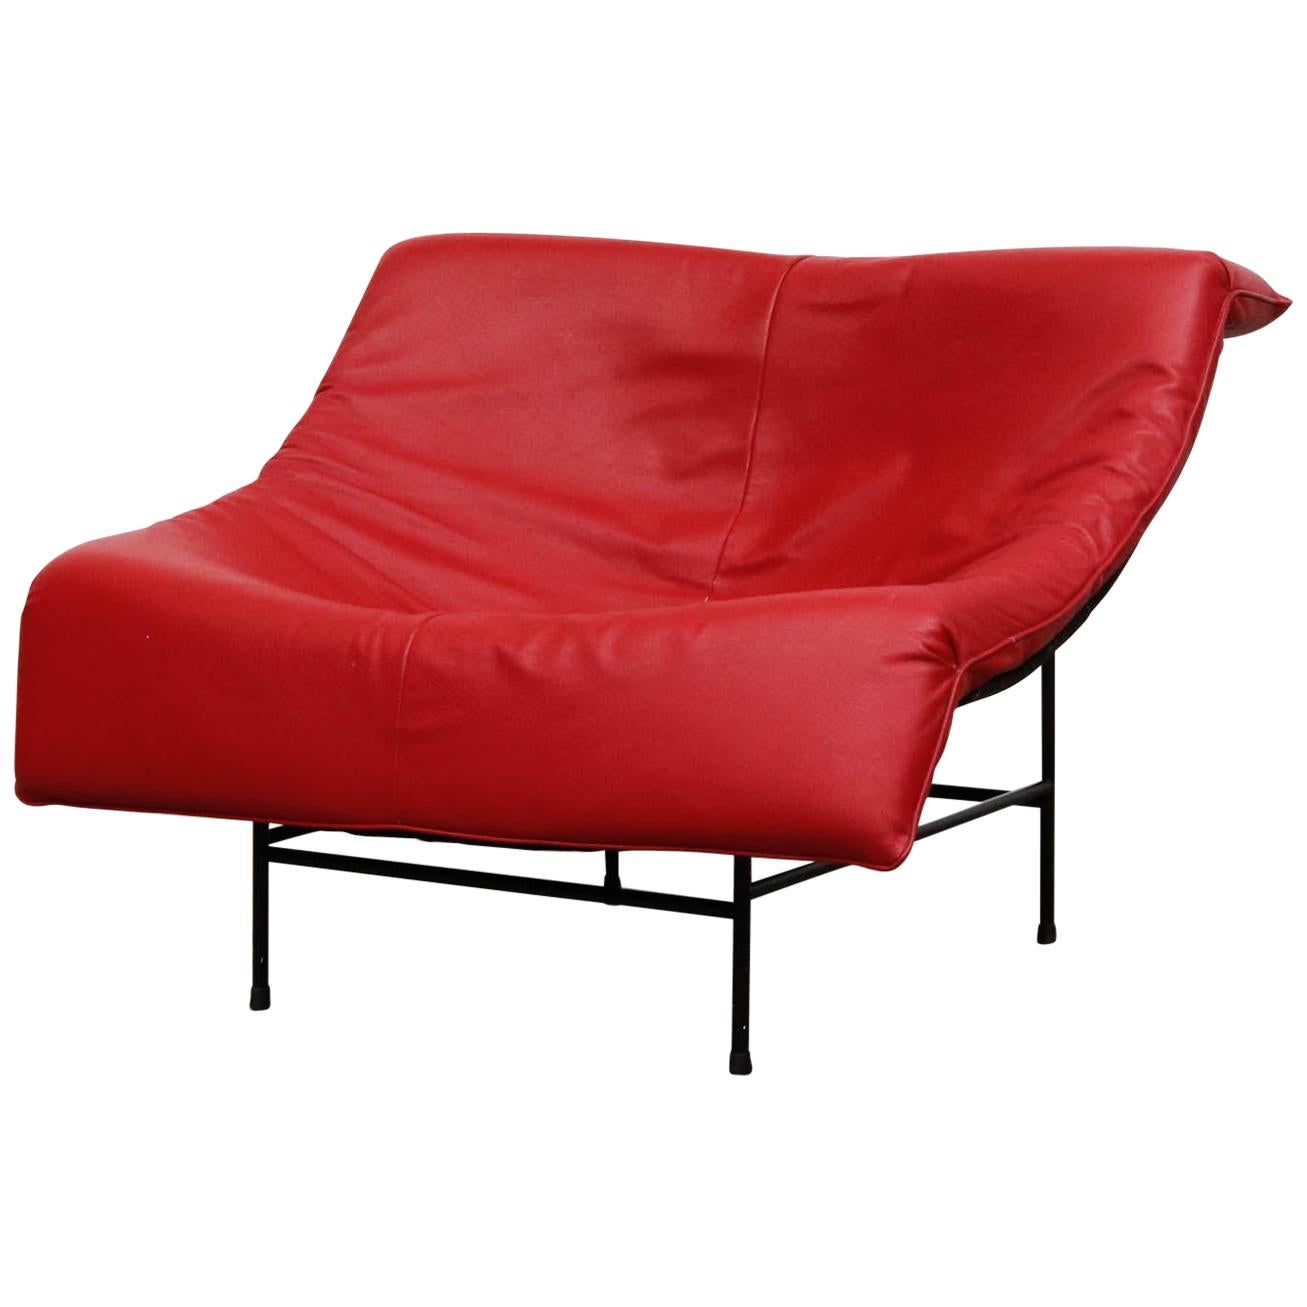 Gerard Van Den Berg "Butterfly" Red Lounge Chair